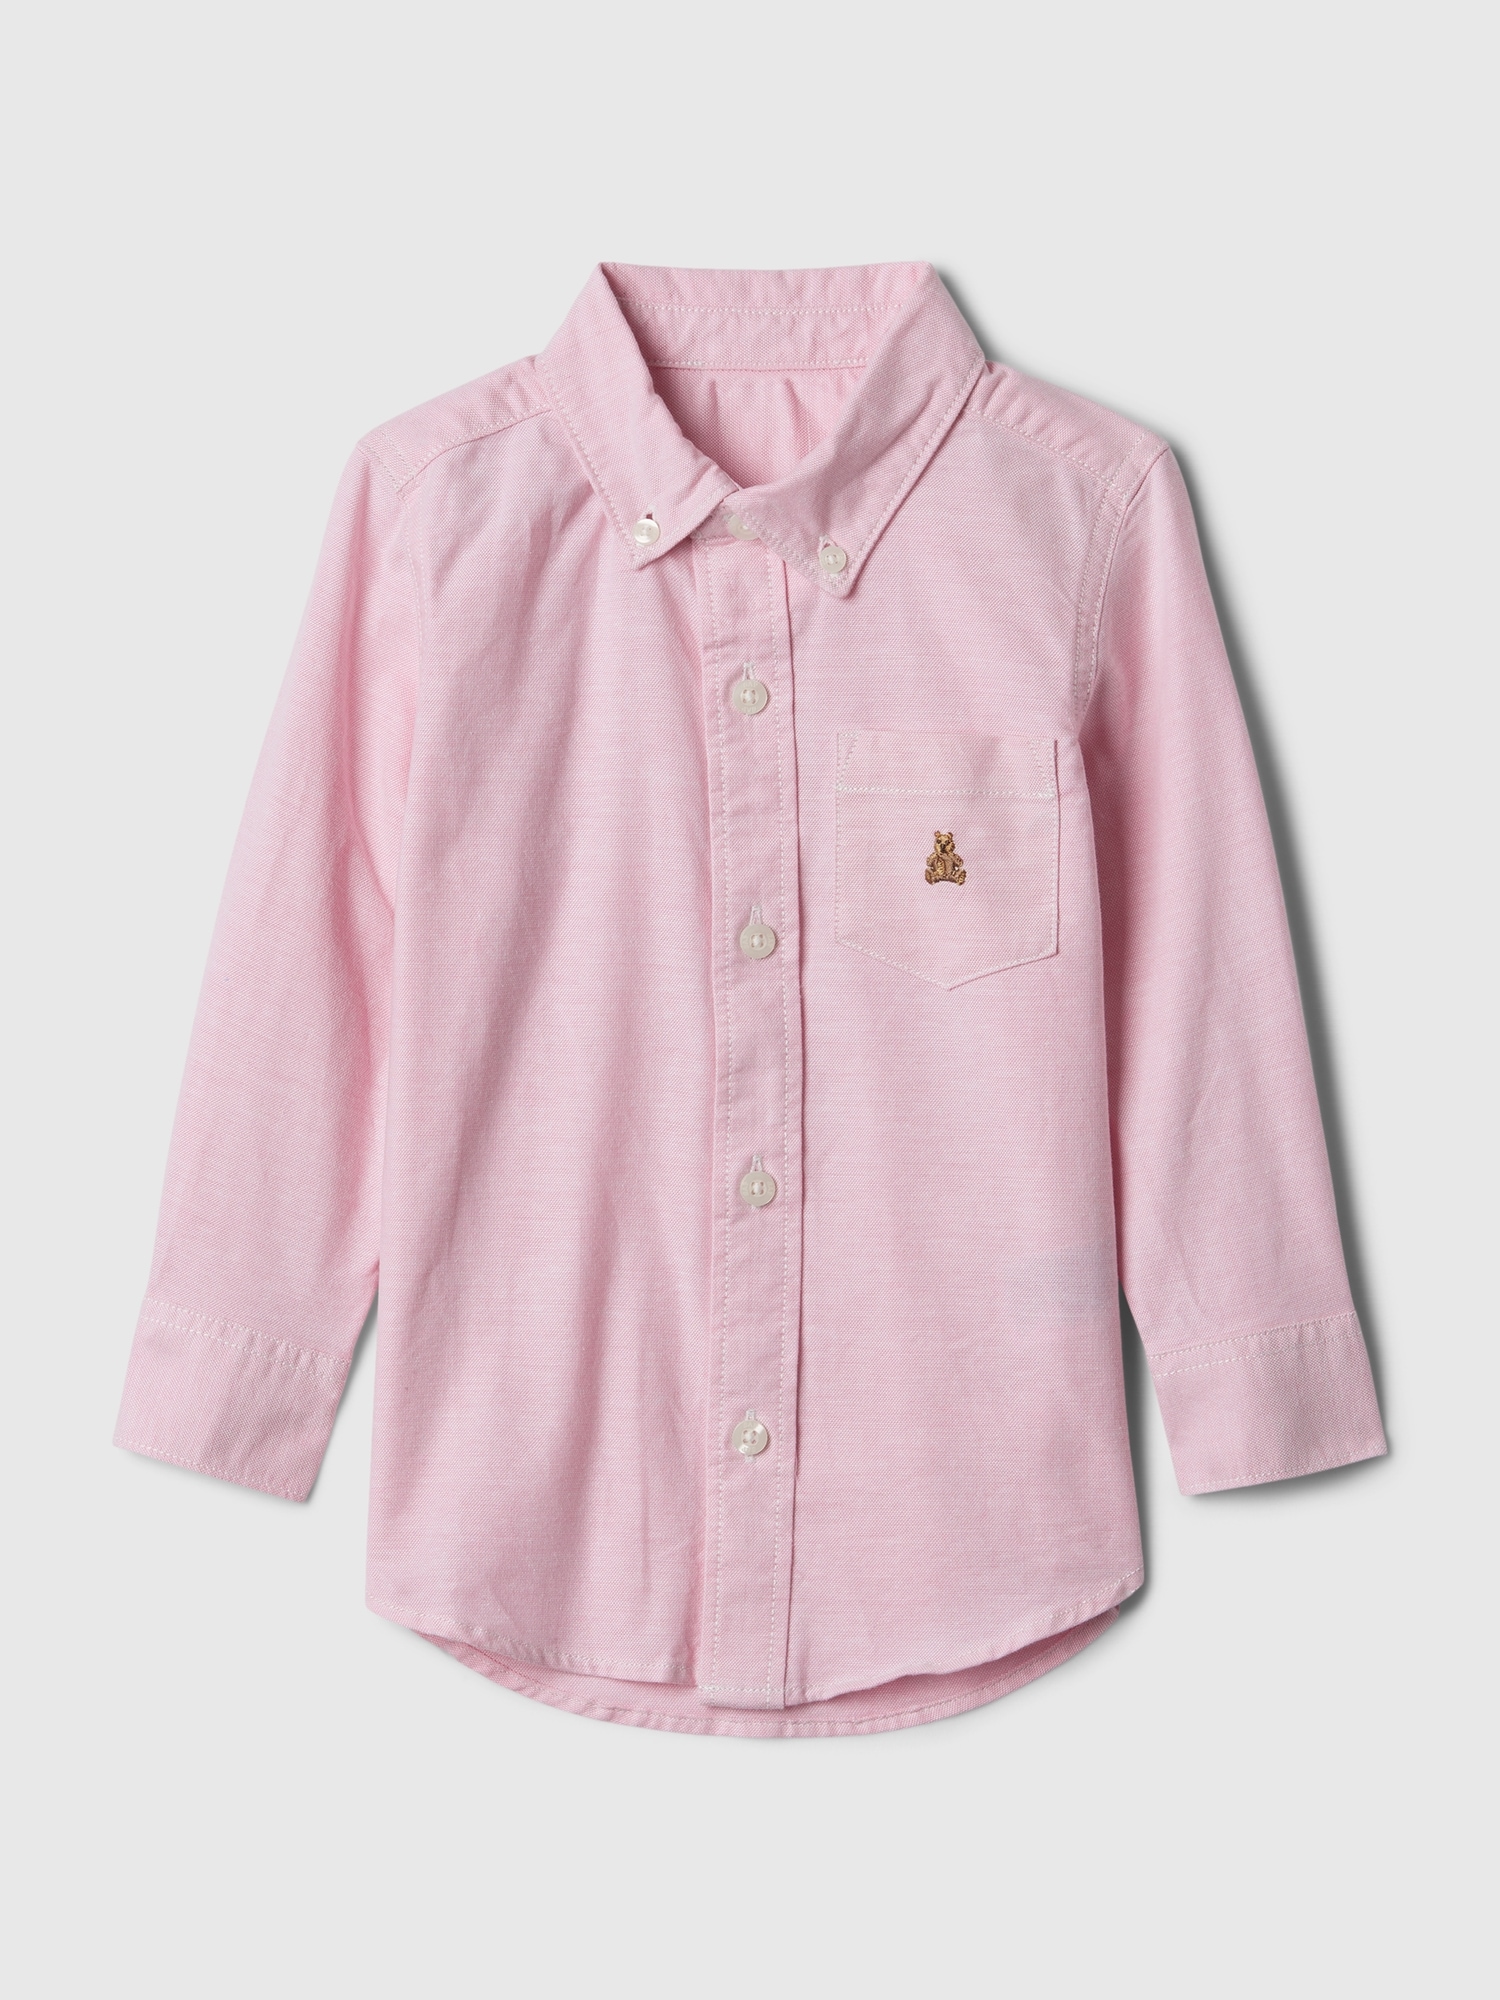 Gap Baby Oxford Shirt In Sugar Pink